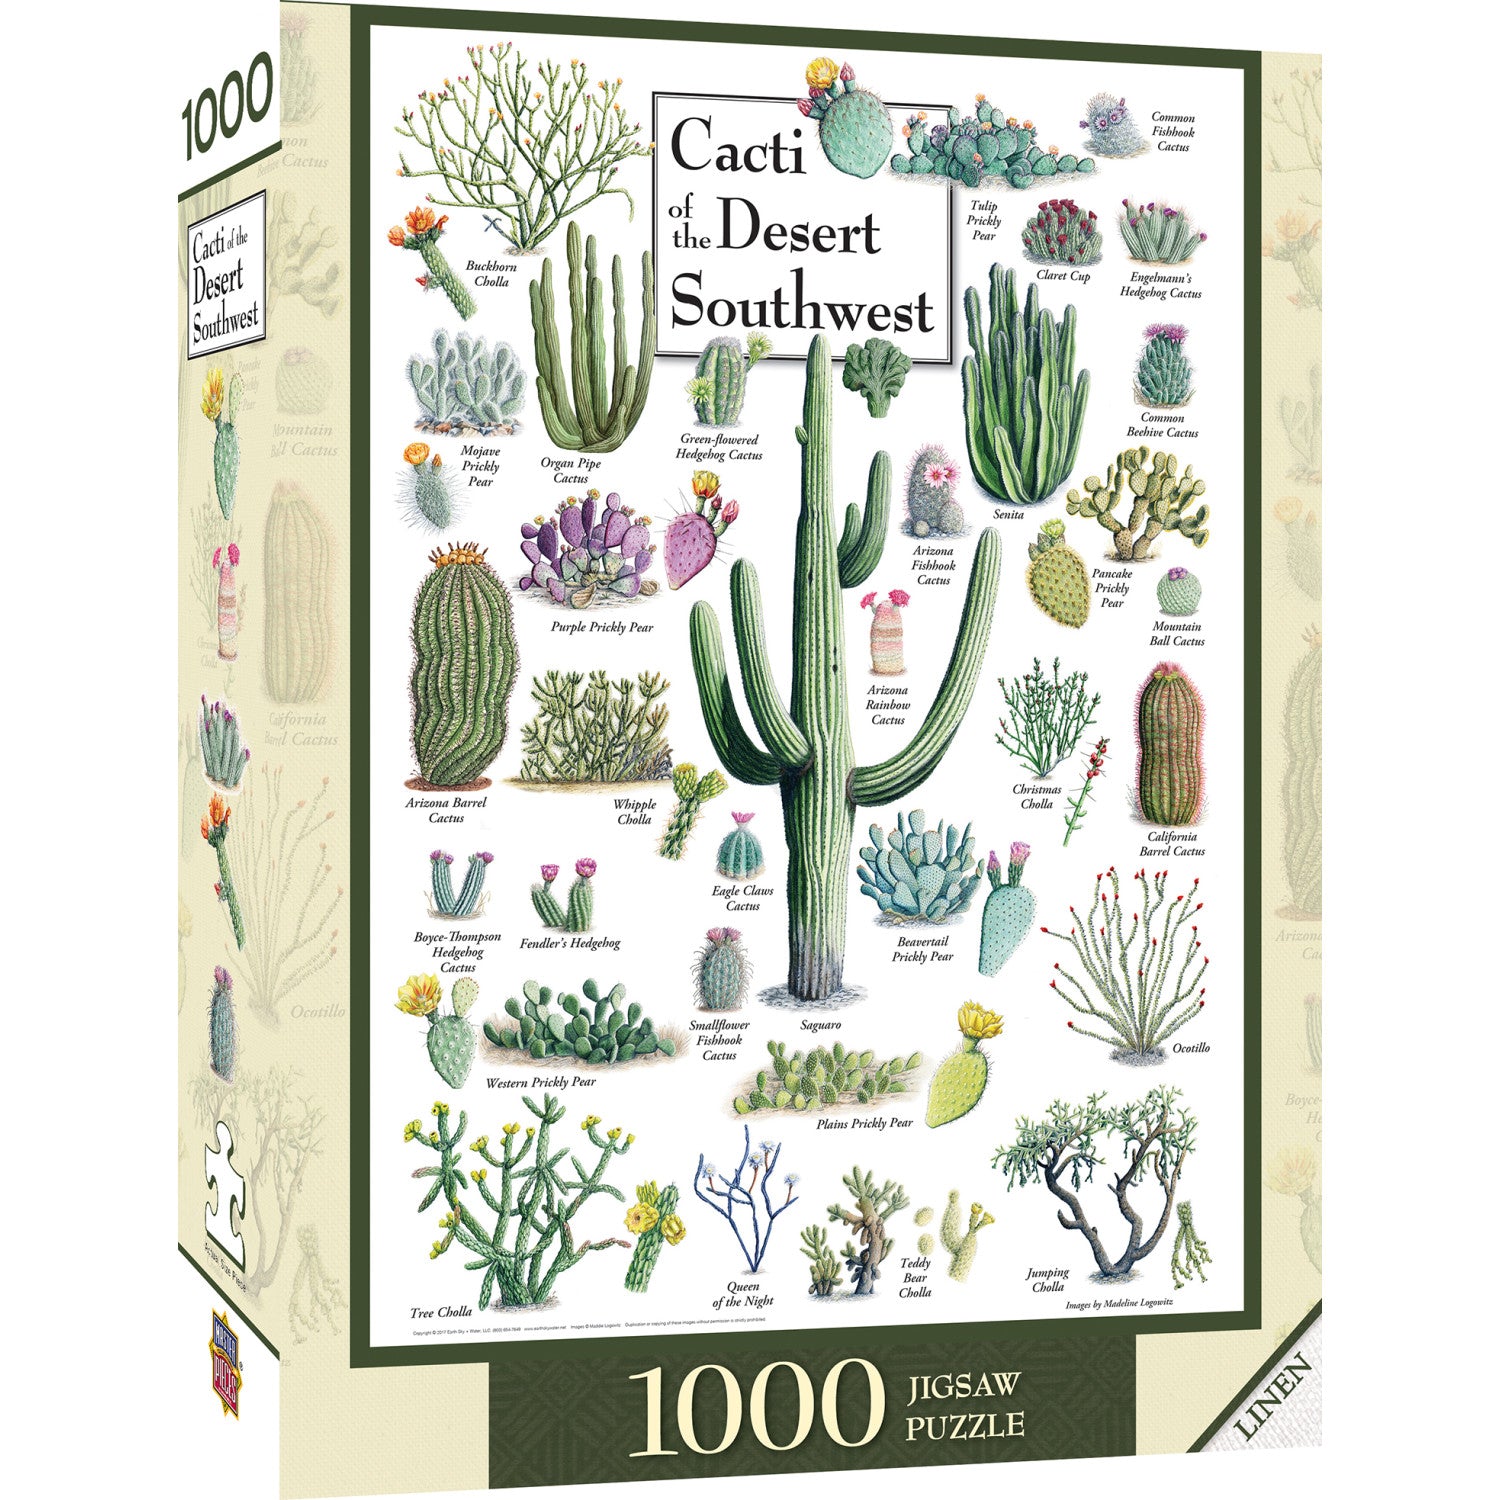 Cacti of the Desert Southwest 1000 Piece Jigsaw Puzzle